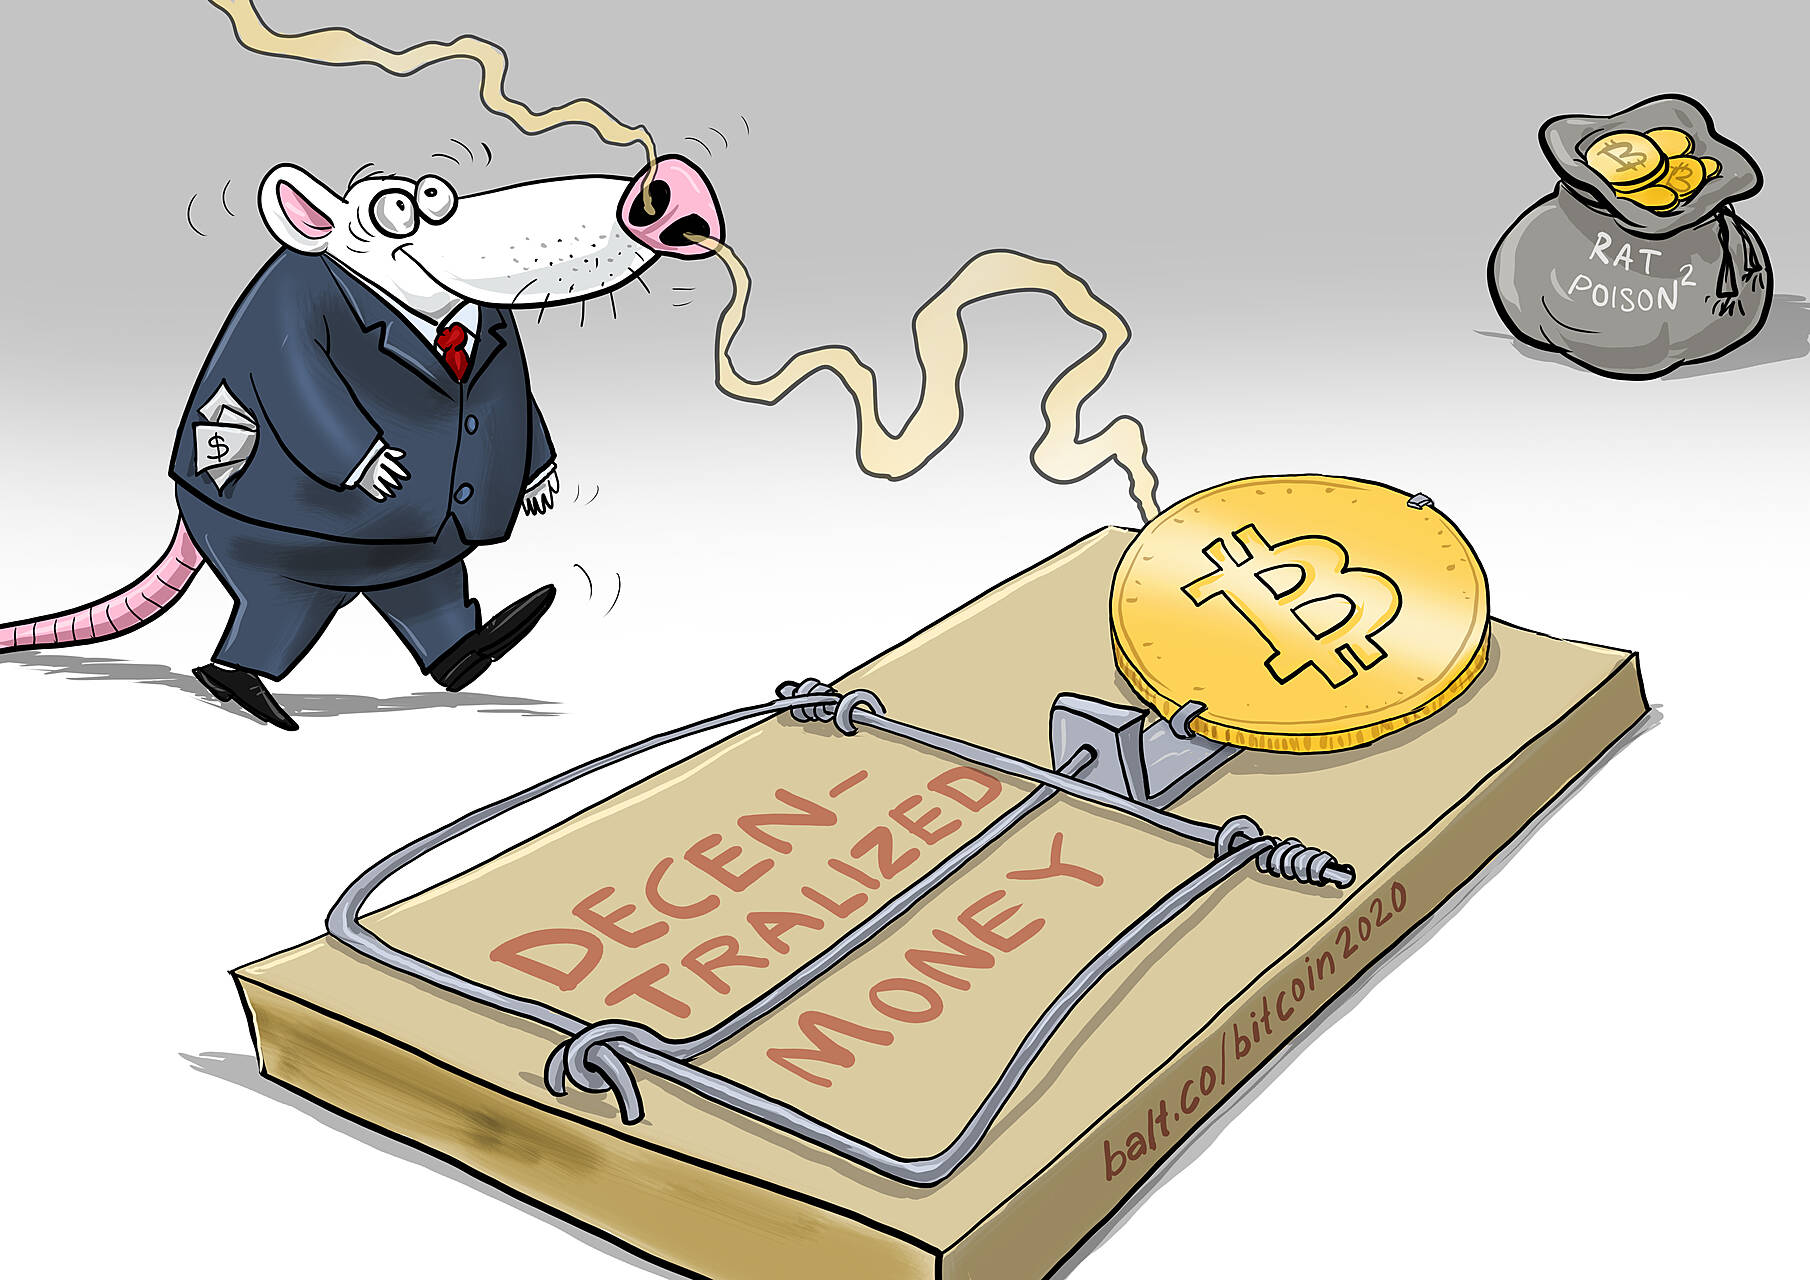 rat-poison-squared-cartoon.jpg